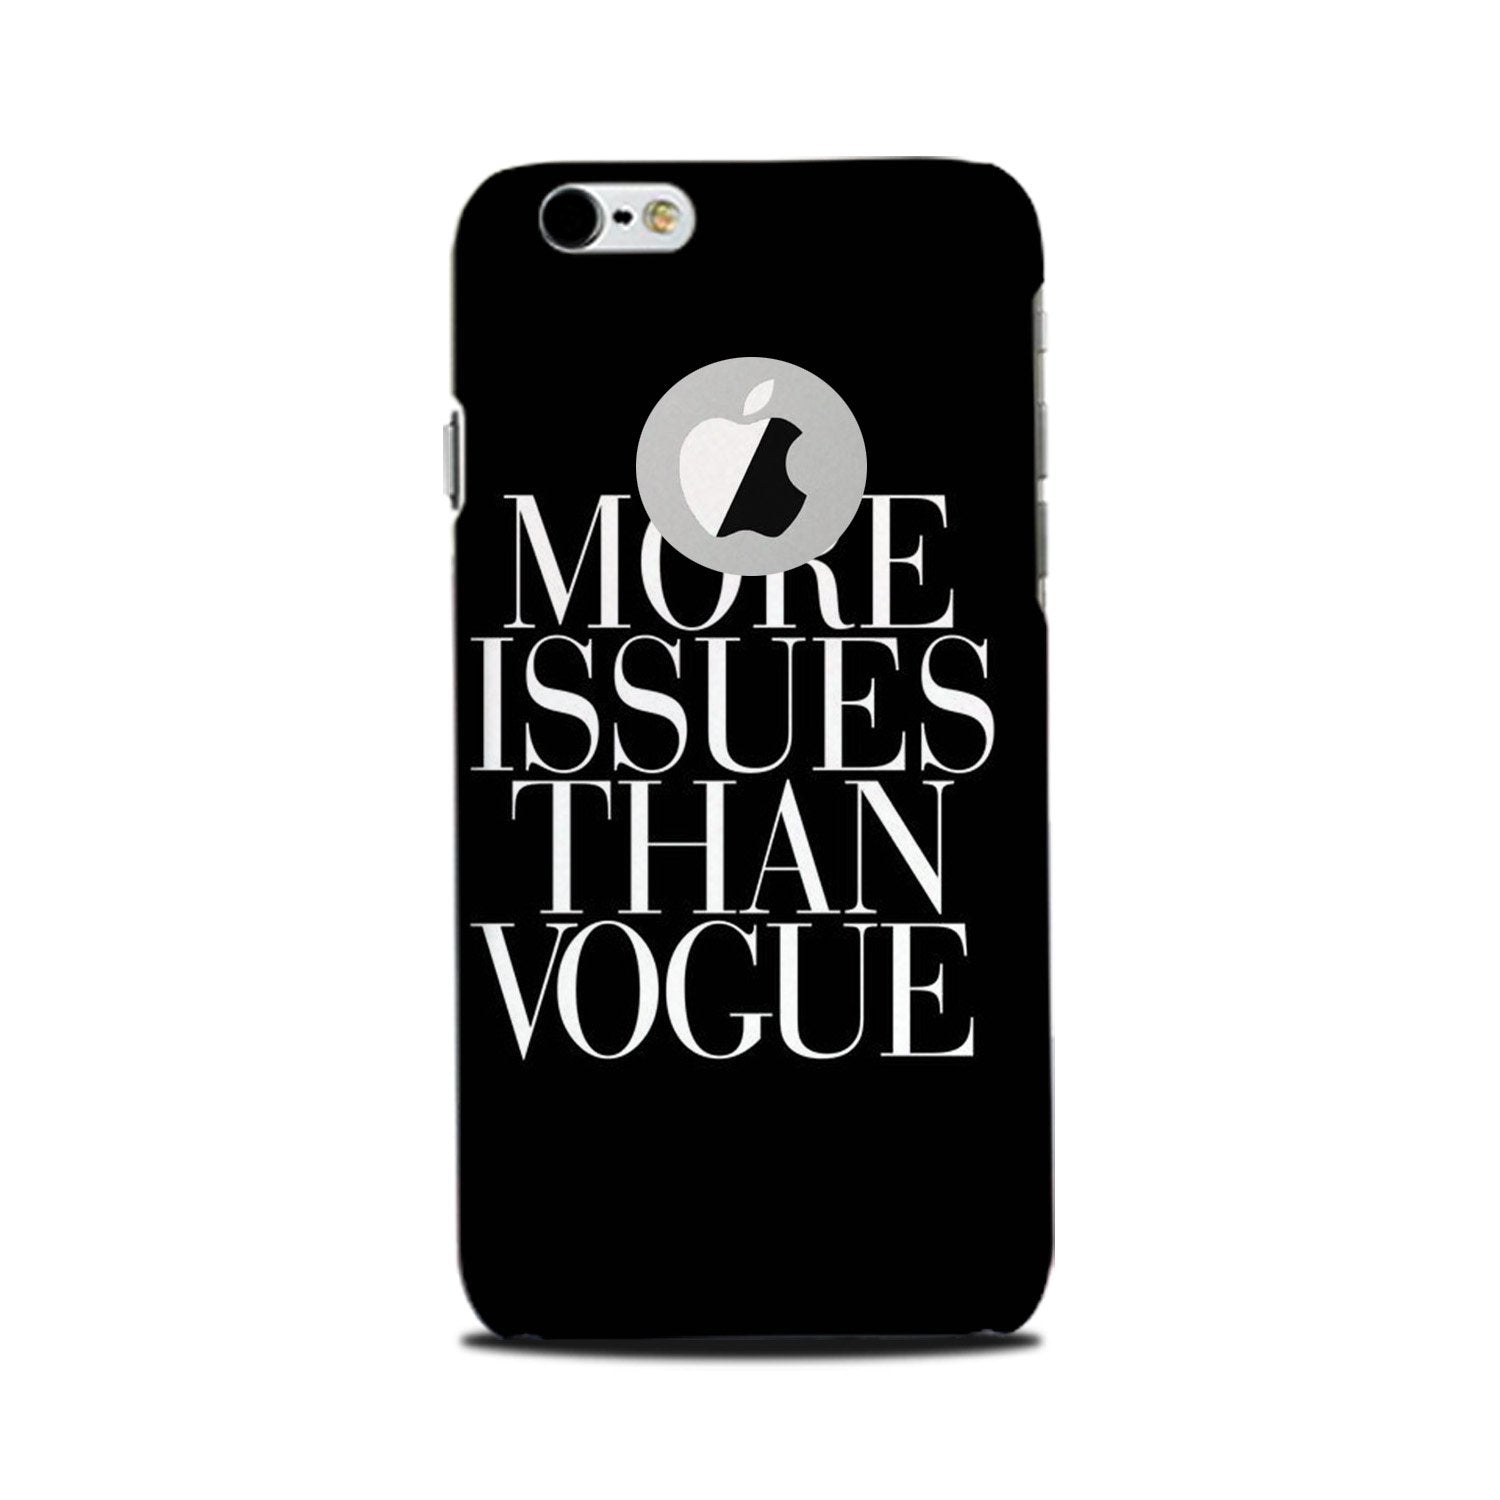 More Issues than Vague Case for iPhone 6 Plus / 6s Plus logo cut 